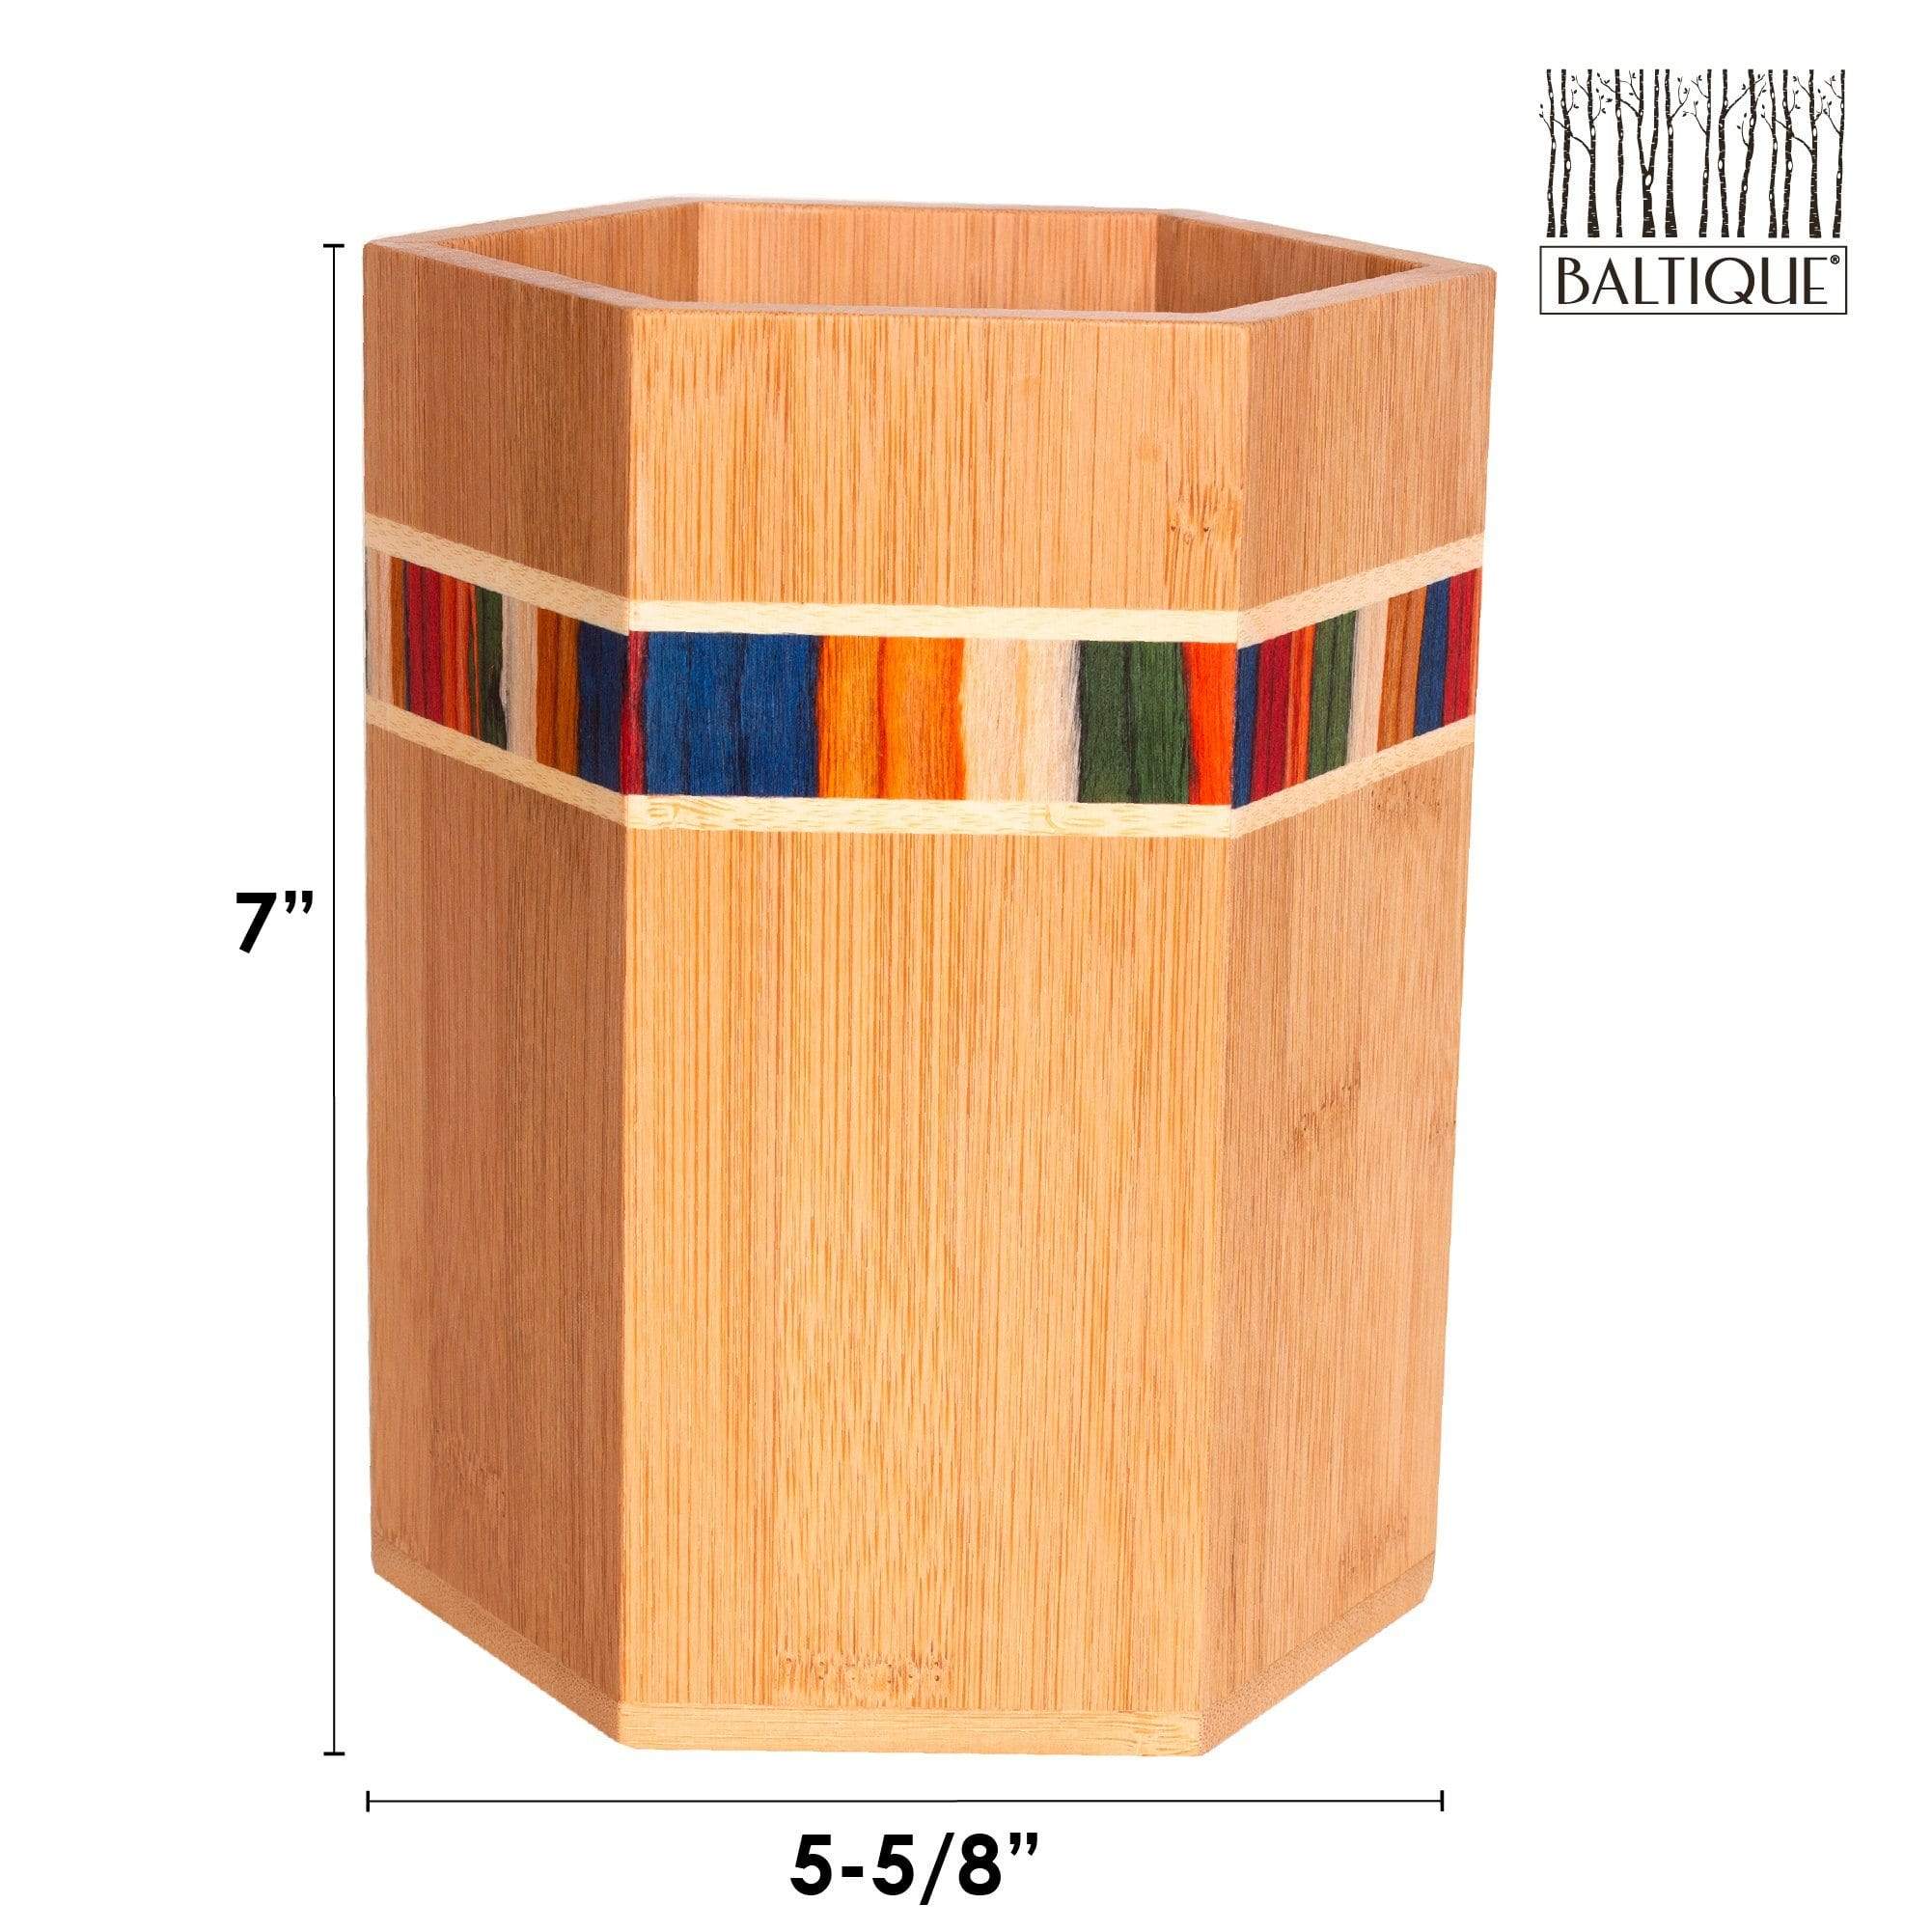 Baltique® Marrakesh Collection 7-Piece Cooking Utensil Set – Totally Bamboo